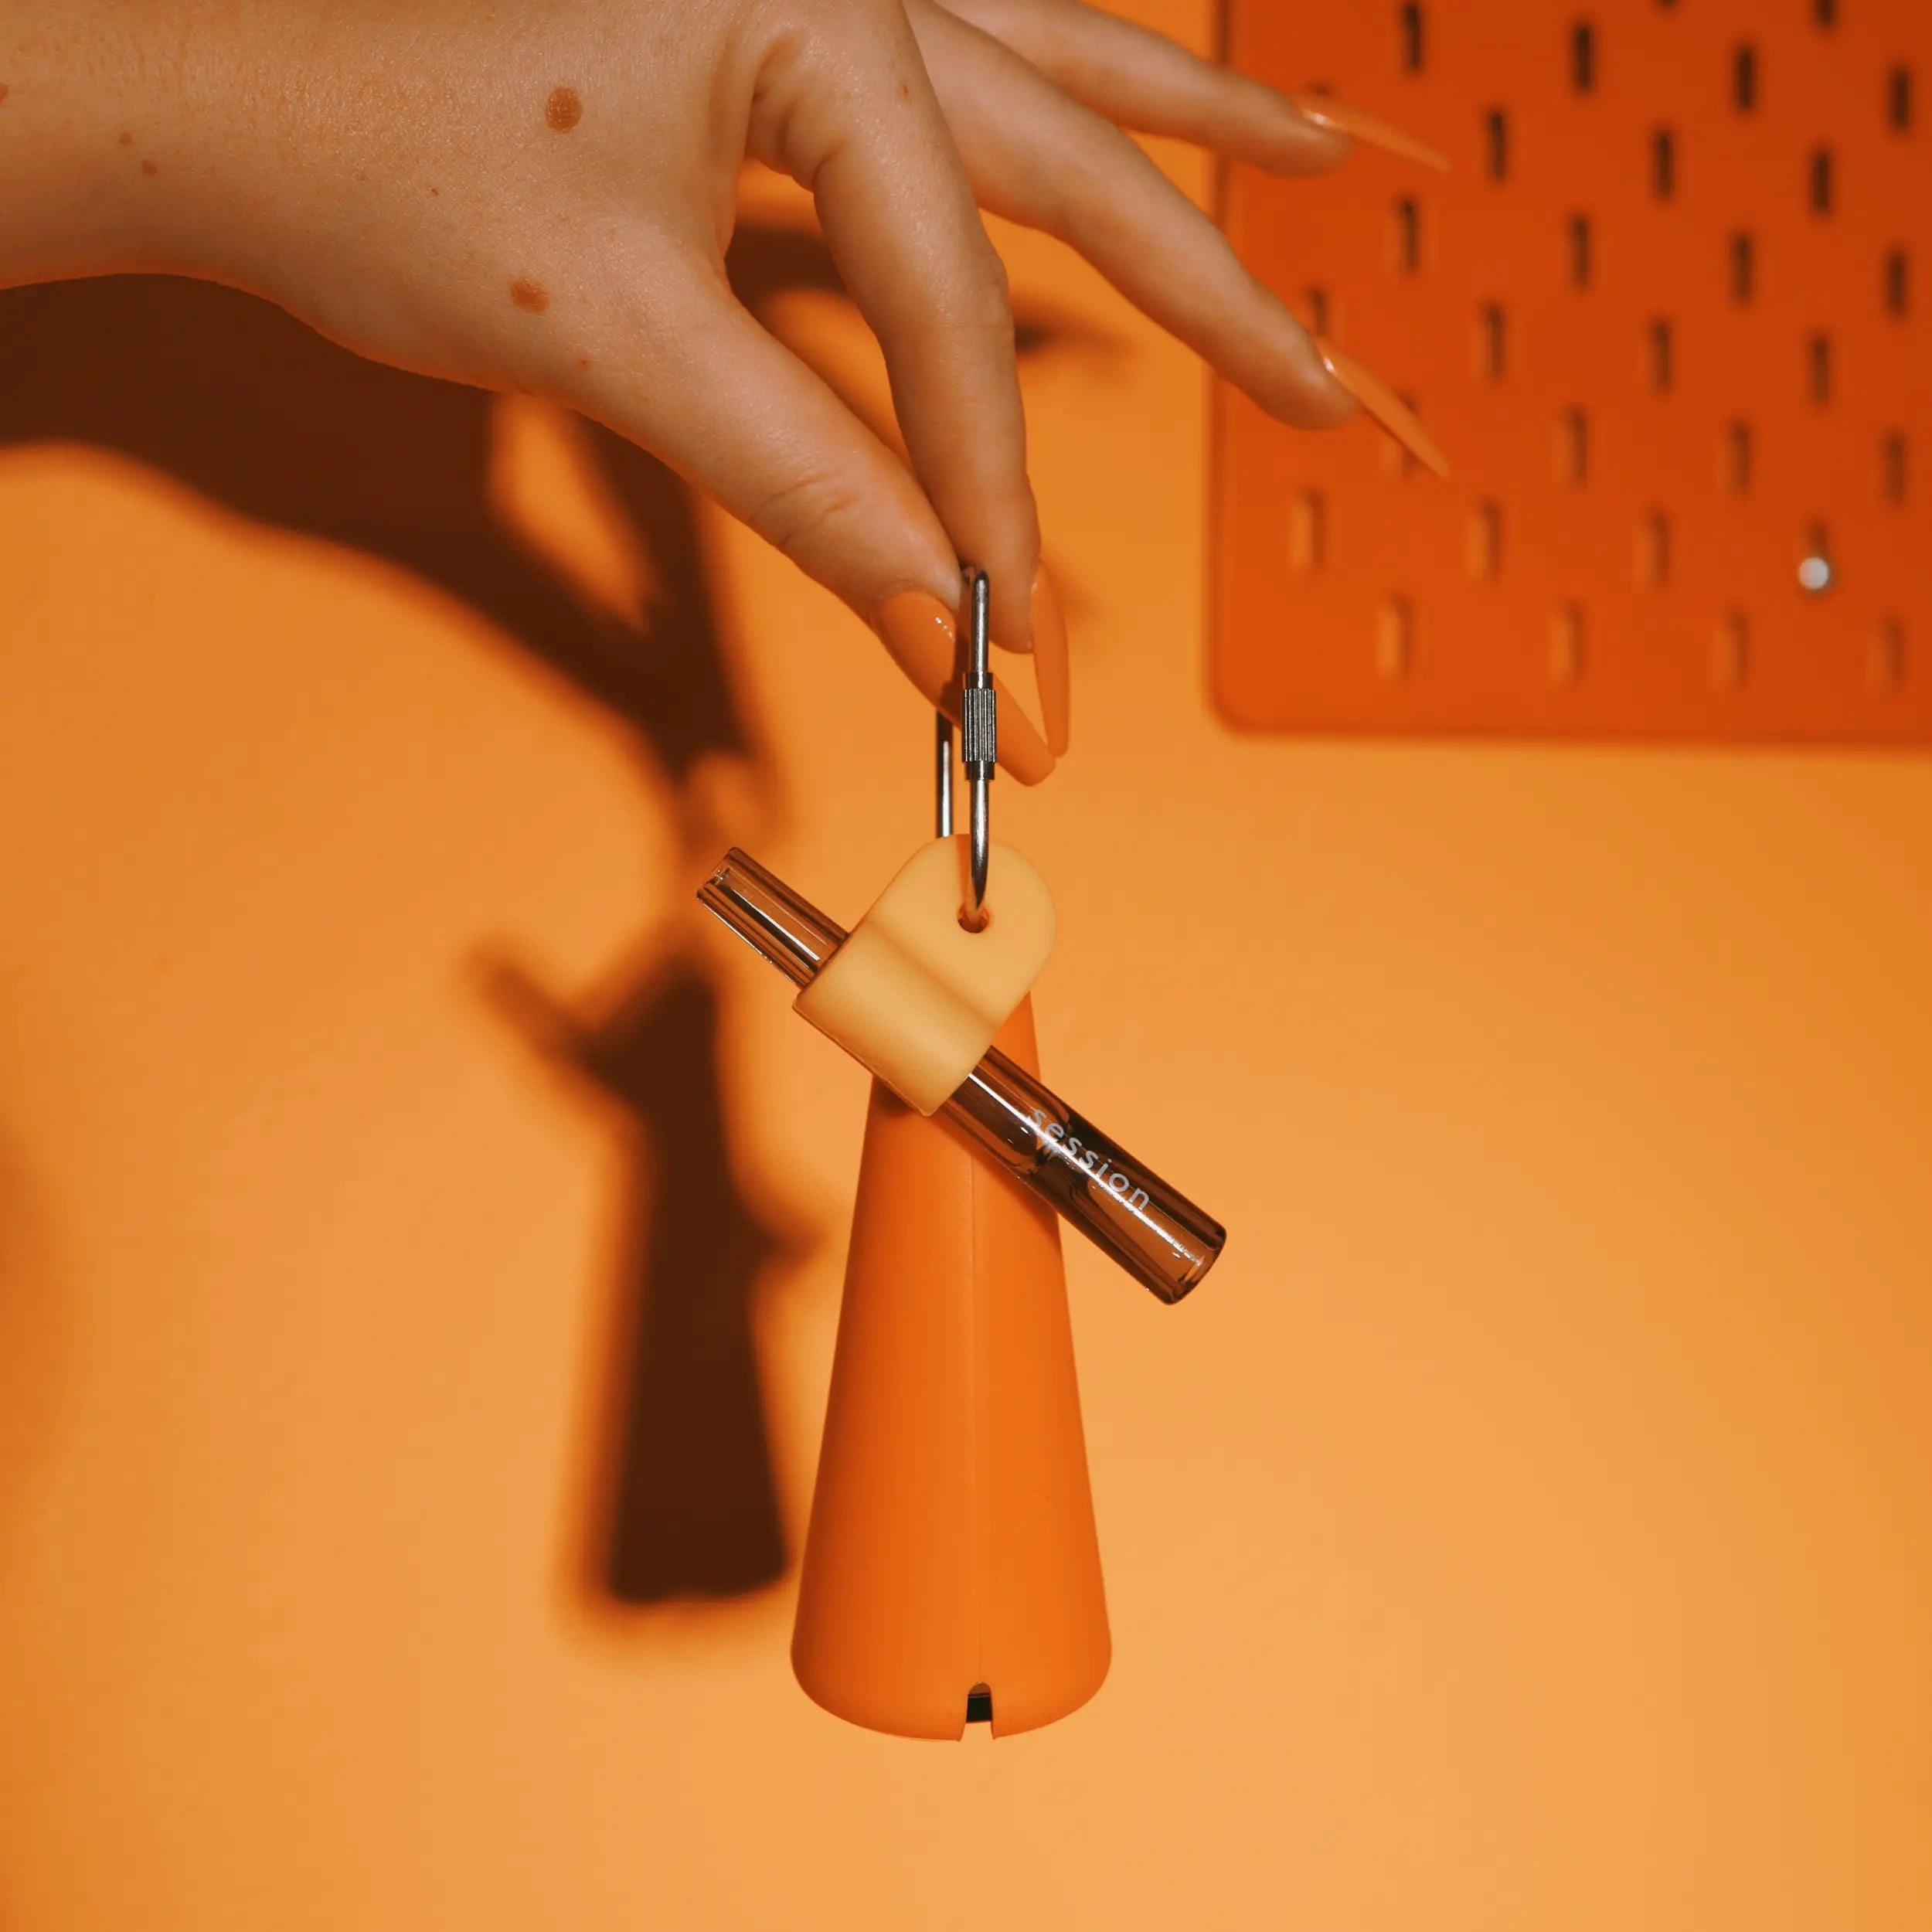 Experience Energy in Orange with Session's Premium Stash Kit.